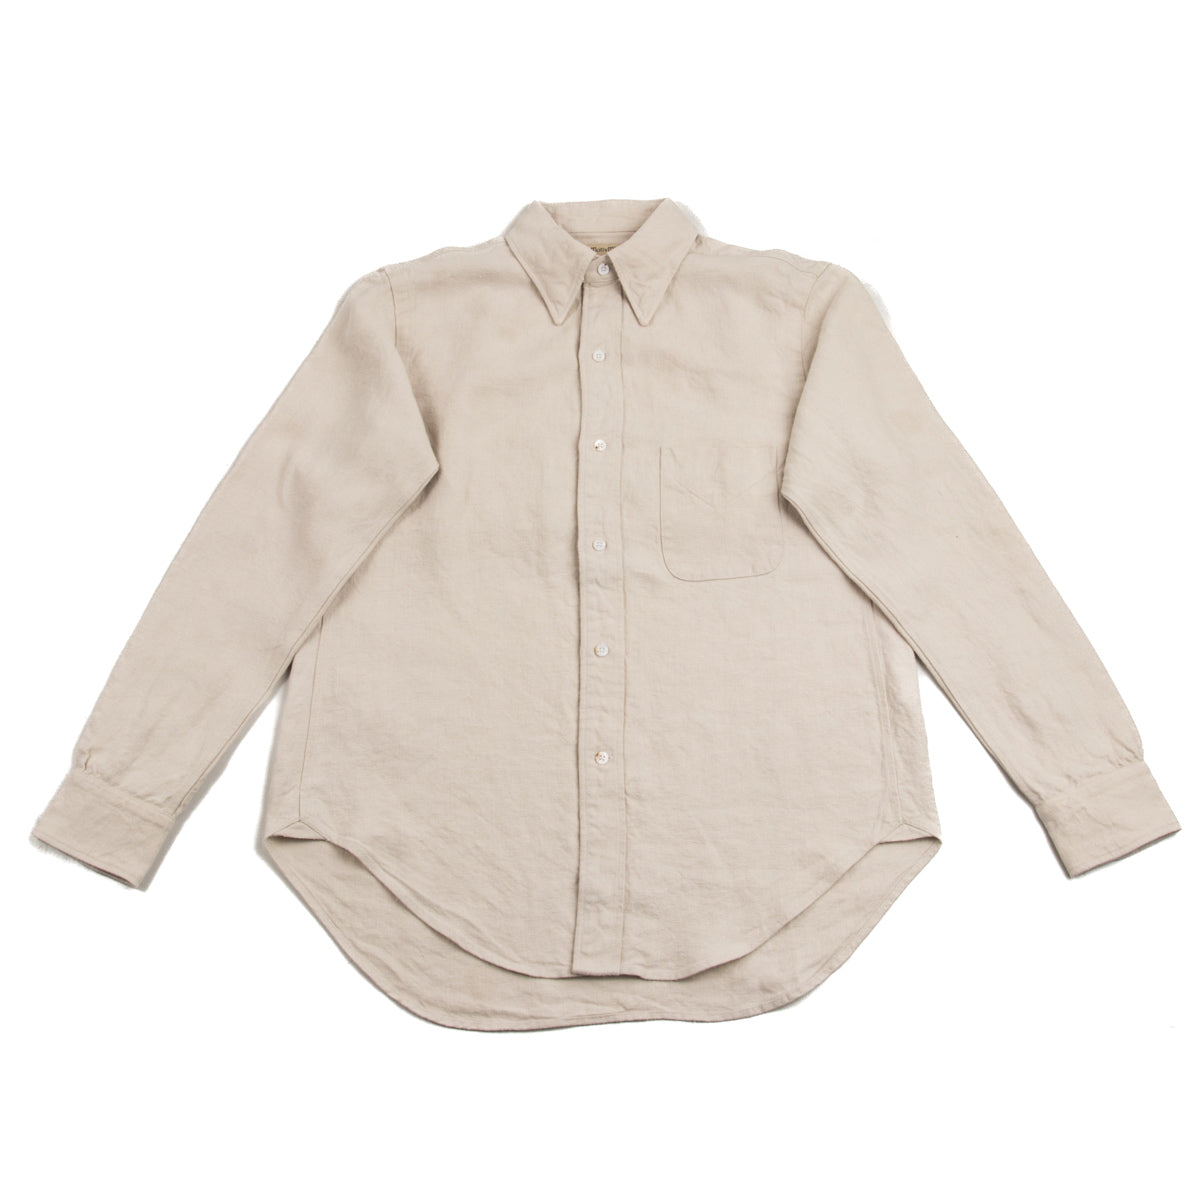 MotivMfg Authentic Fit BD Shirt - Natural Japanese Cotton Flannel